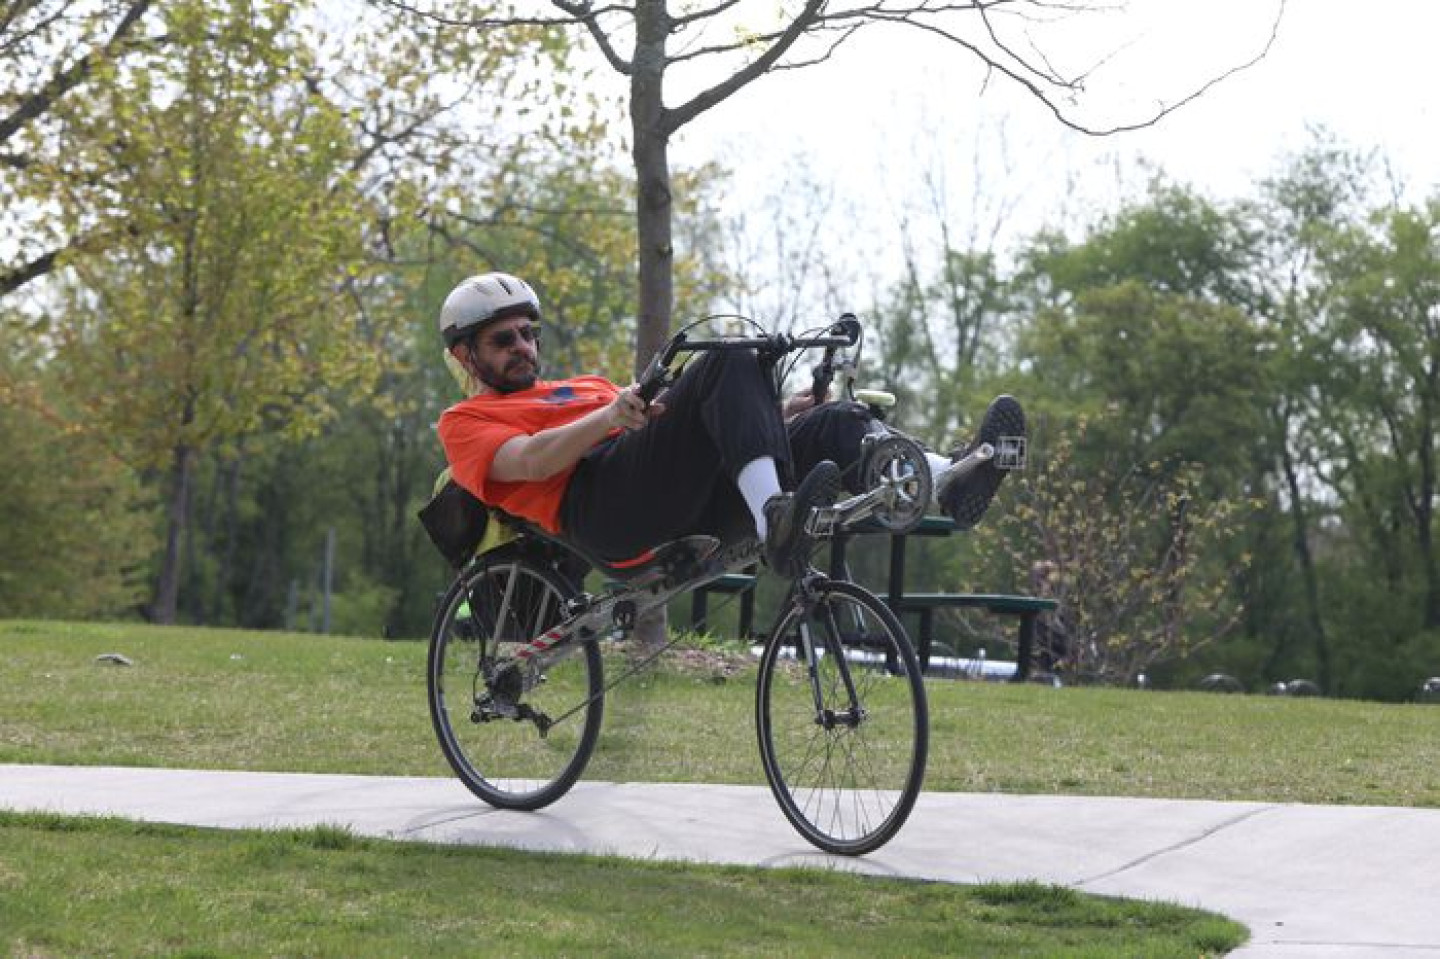 Pancella rides a bike laying on his back.